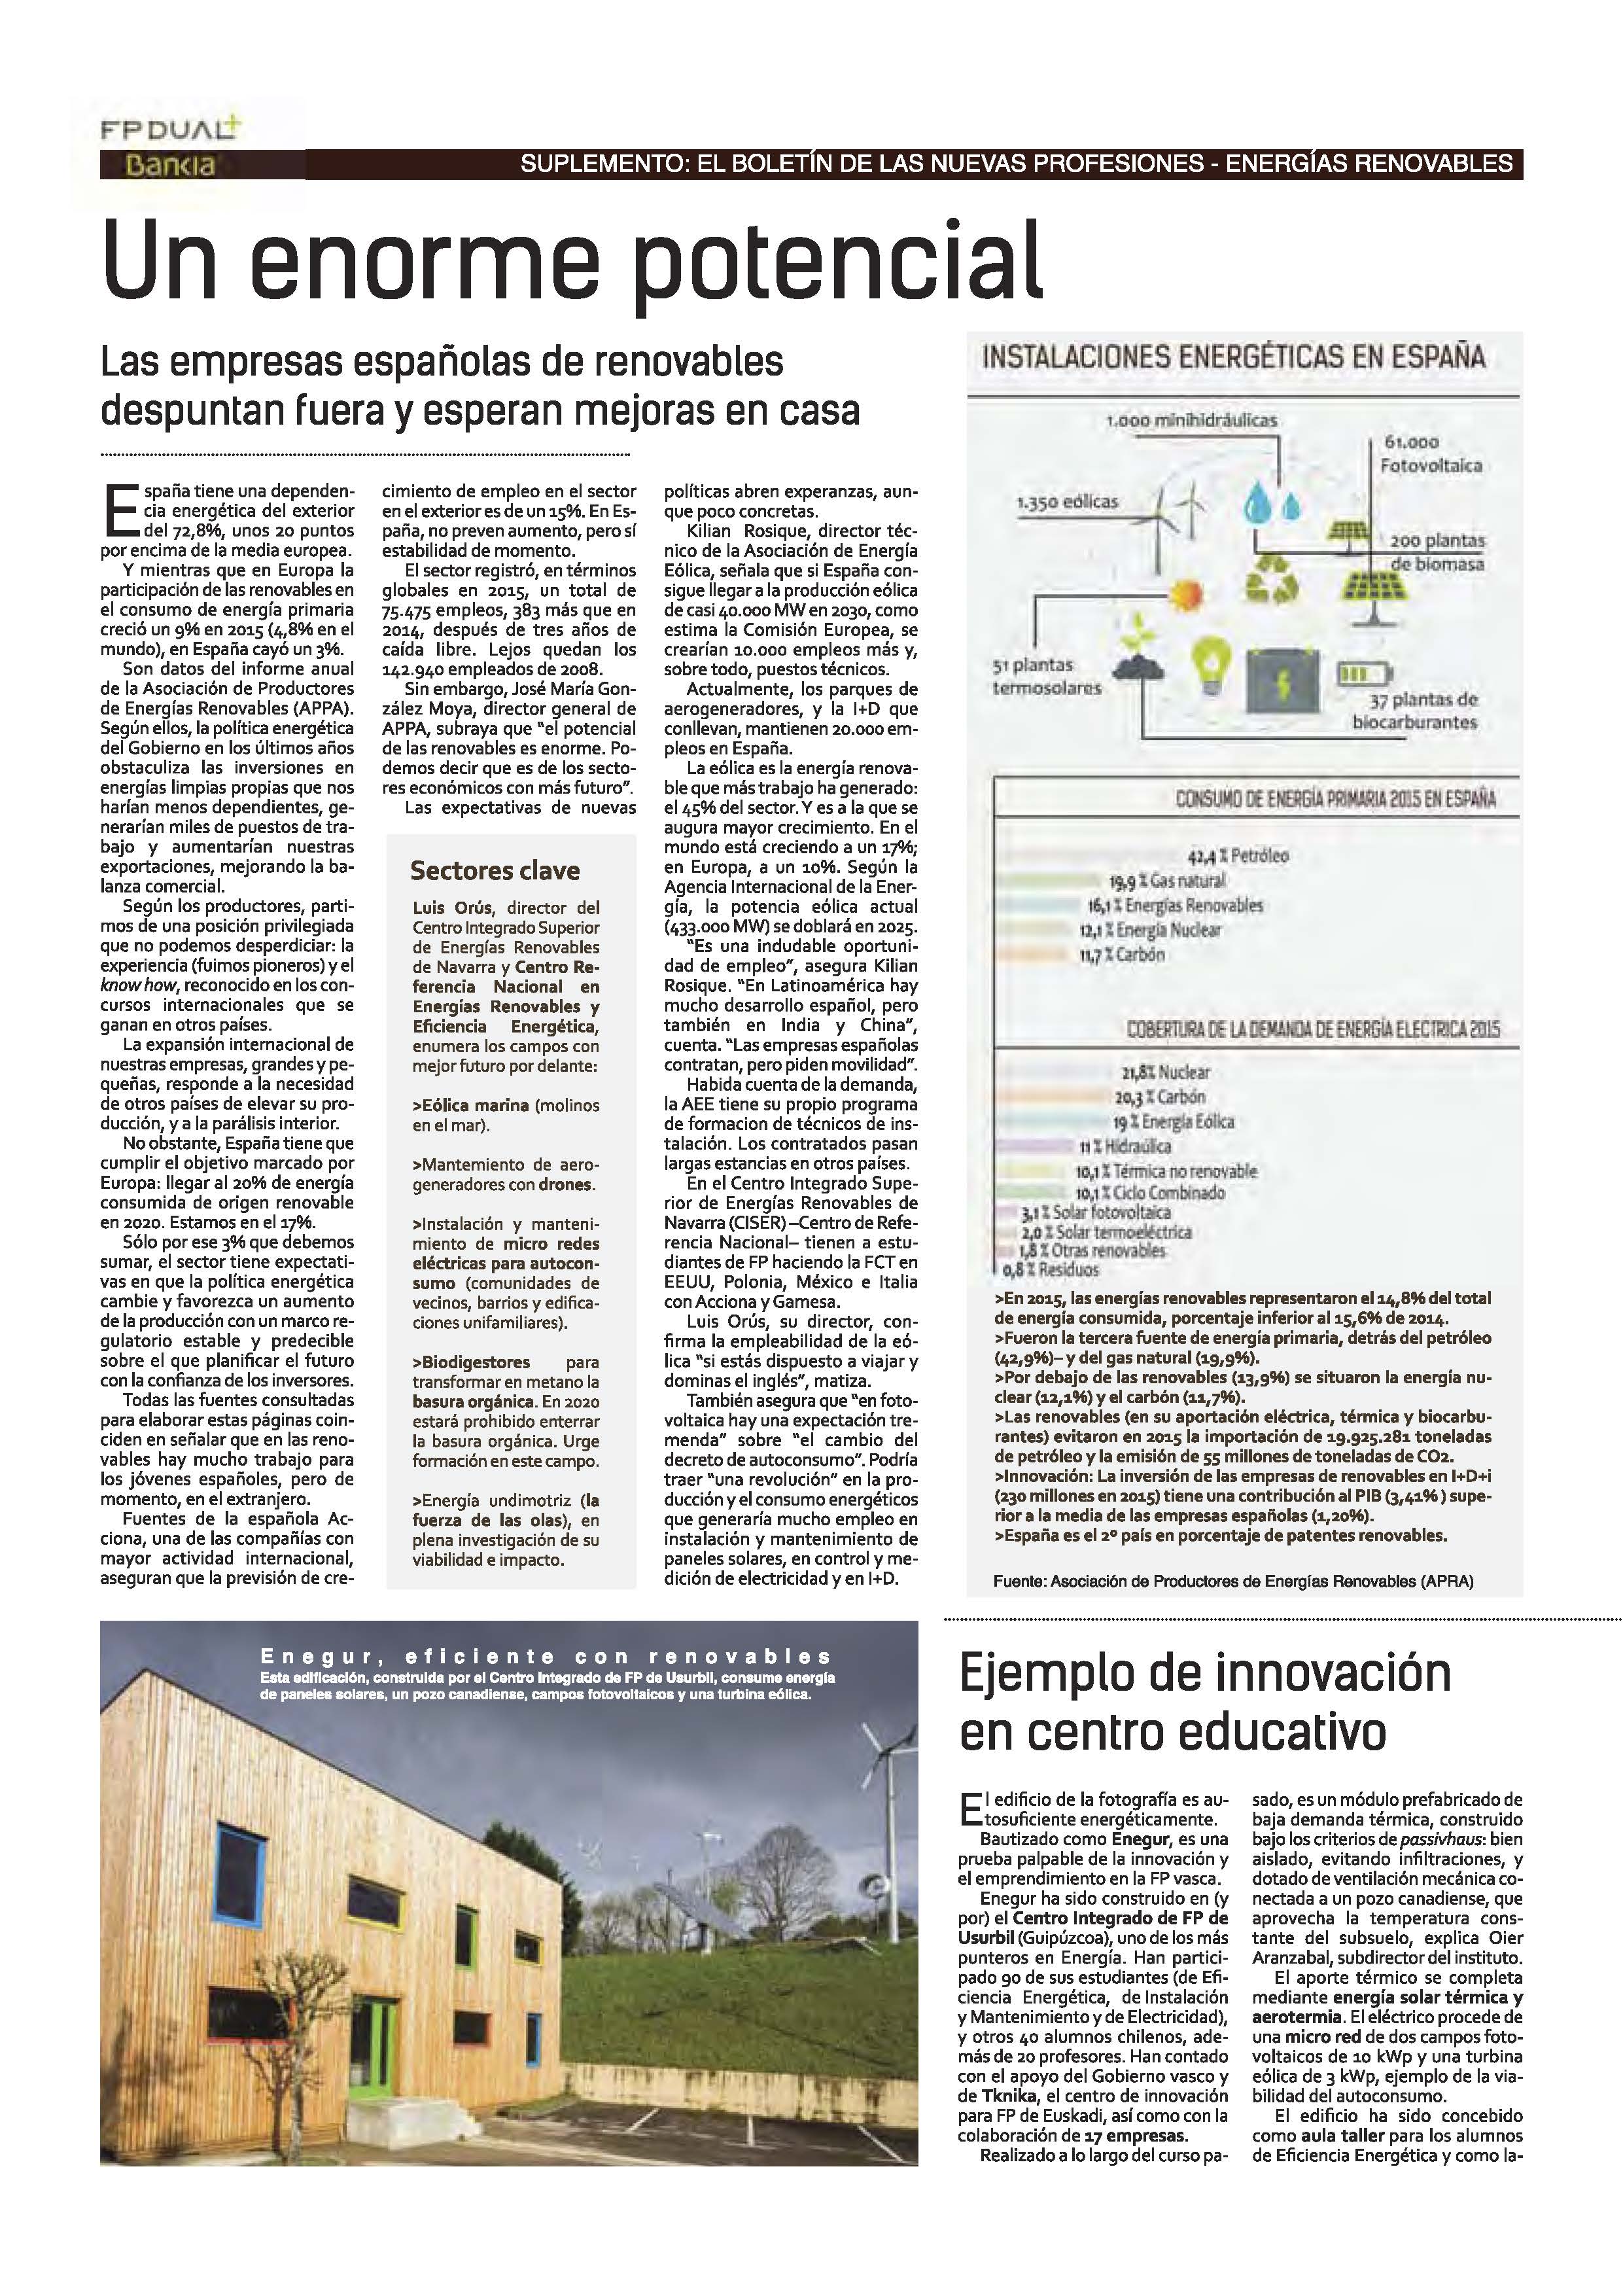 New jobs: renewable energies. Source: Magisterio Magazine (Article in Spanish)